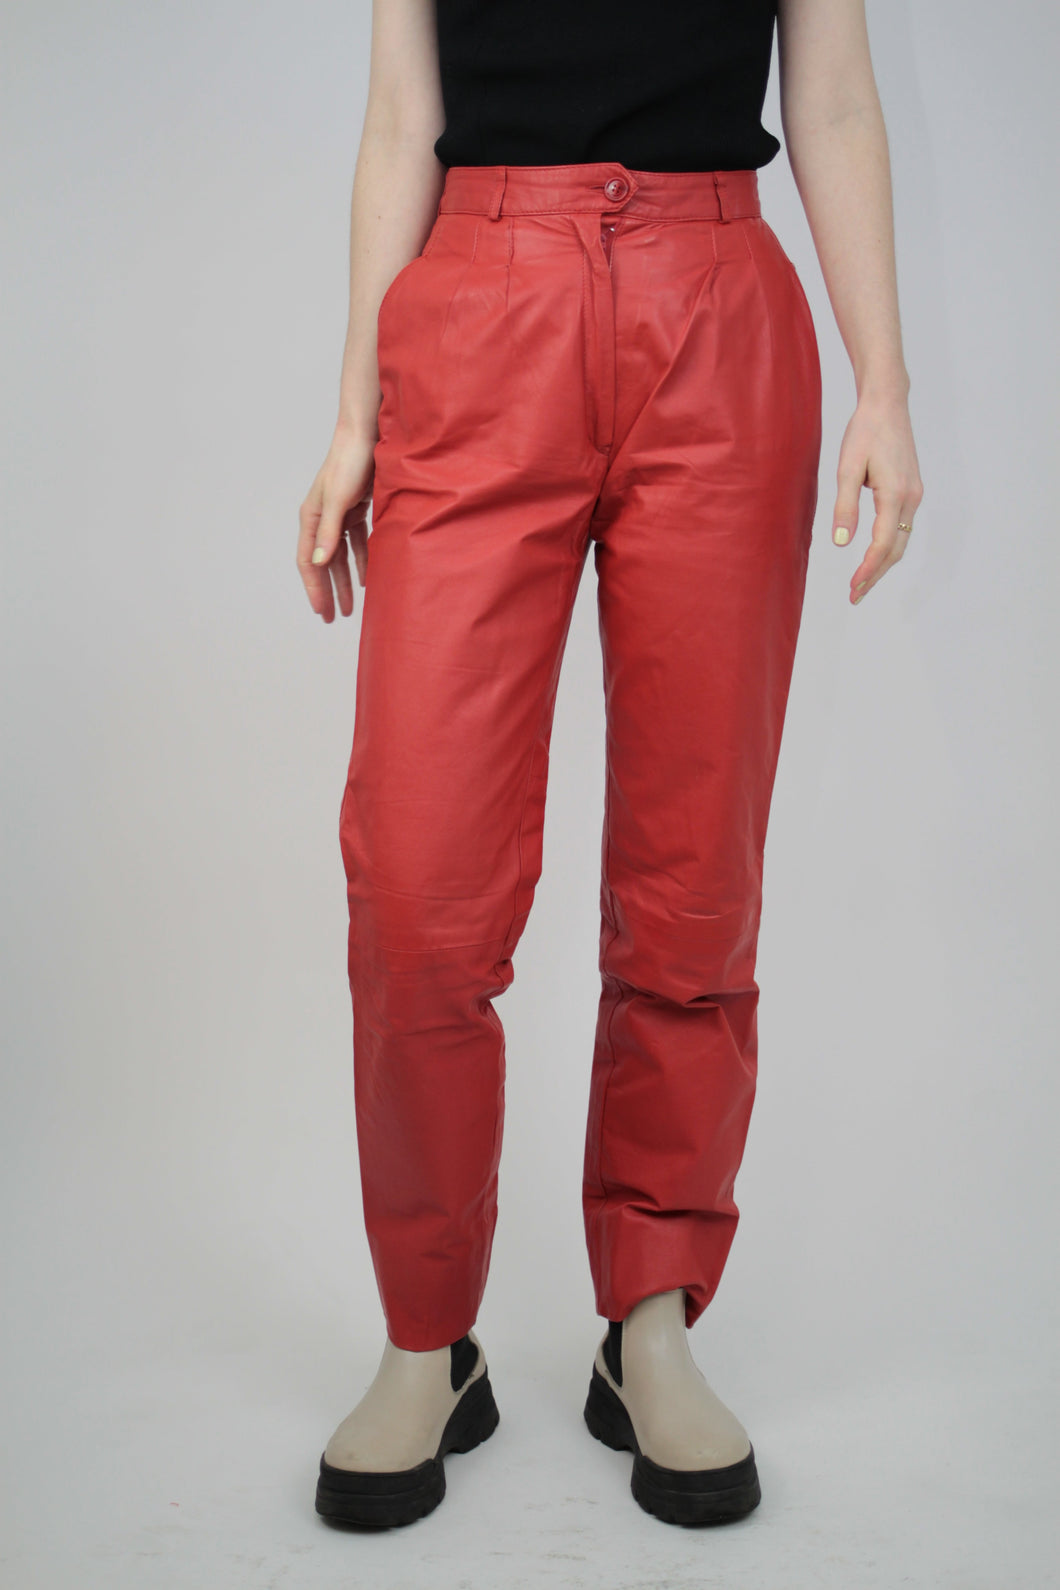 Rote Lederhose (Vintage)